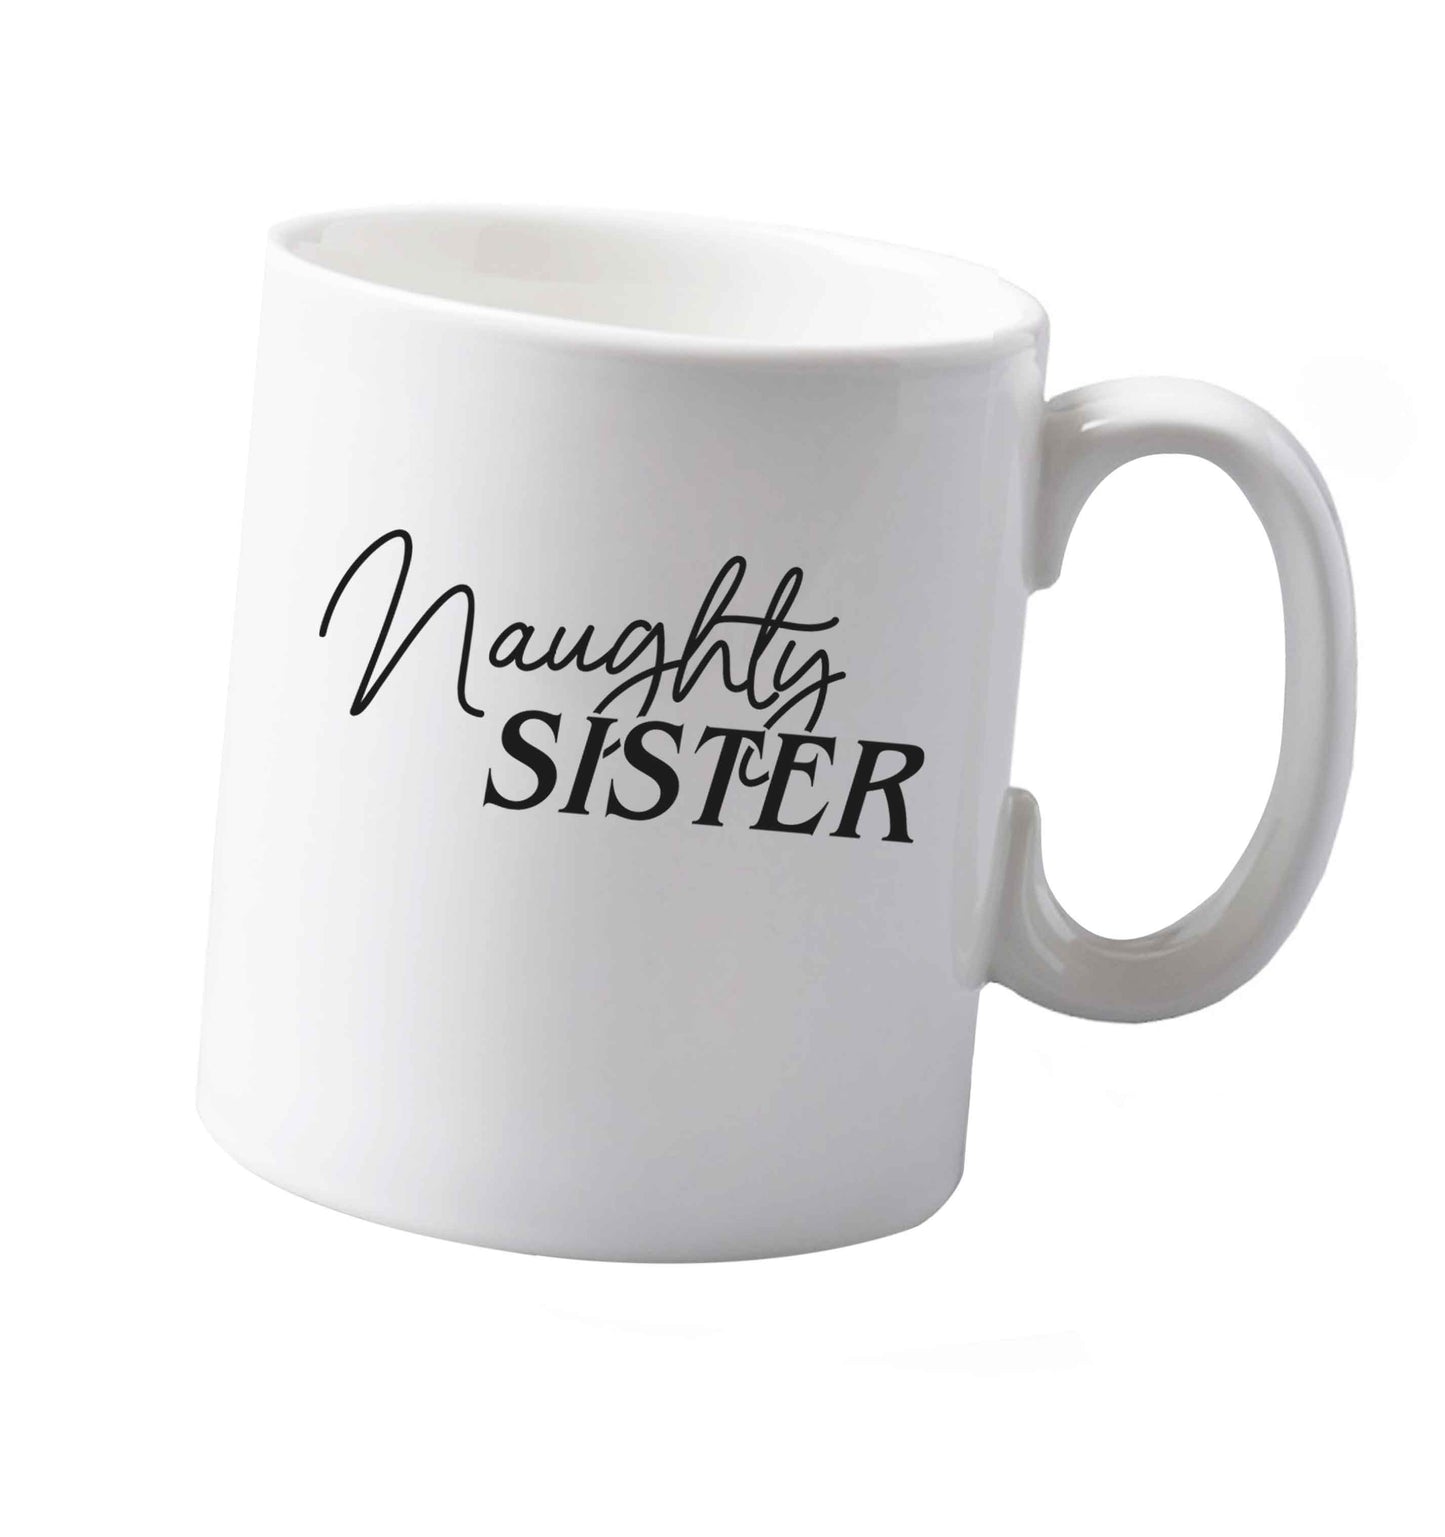 10 oz Naughty Sister ceramic mug both sides